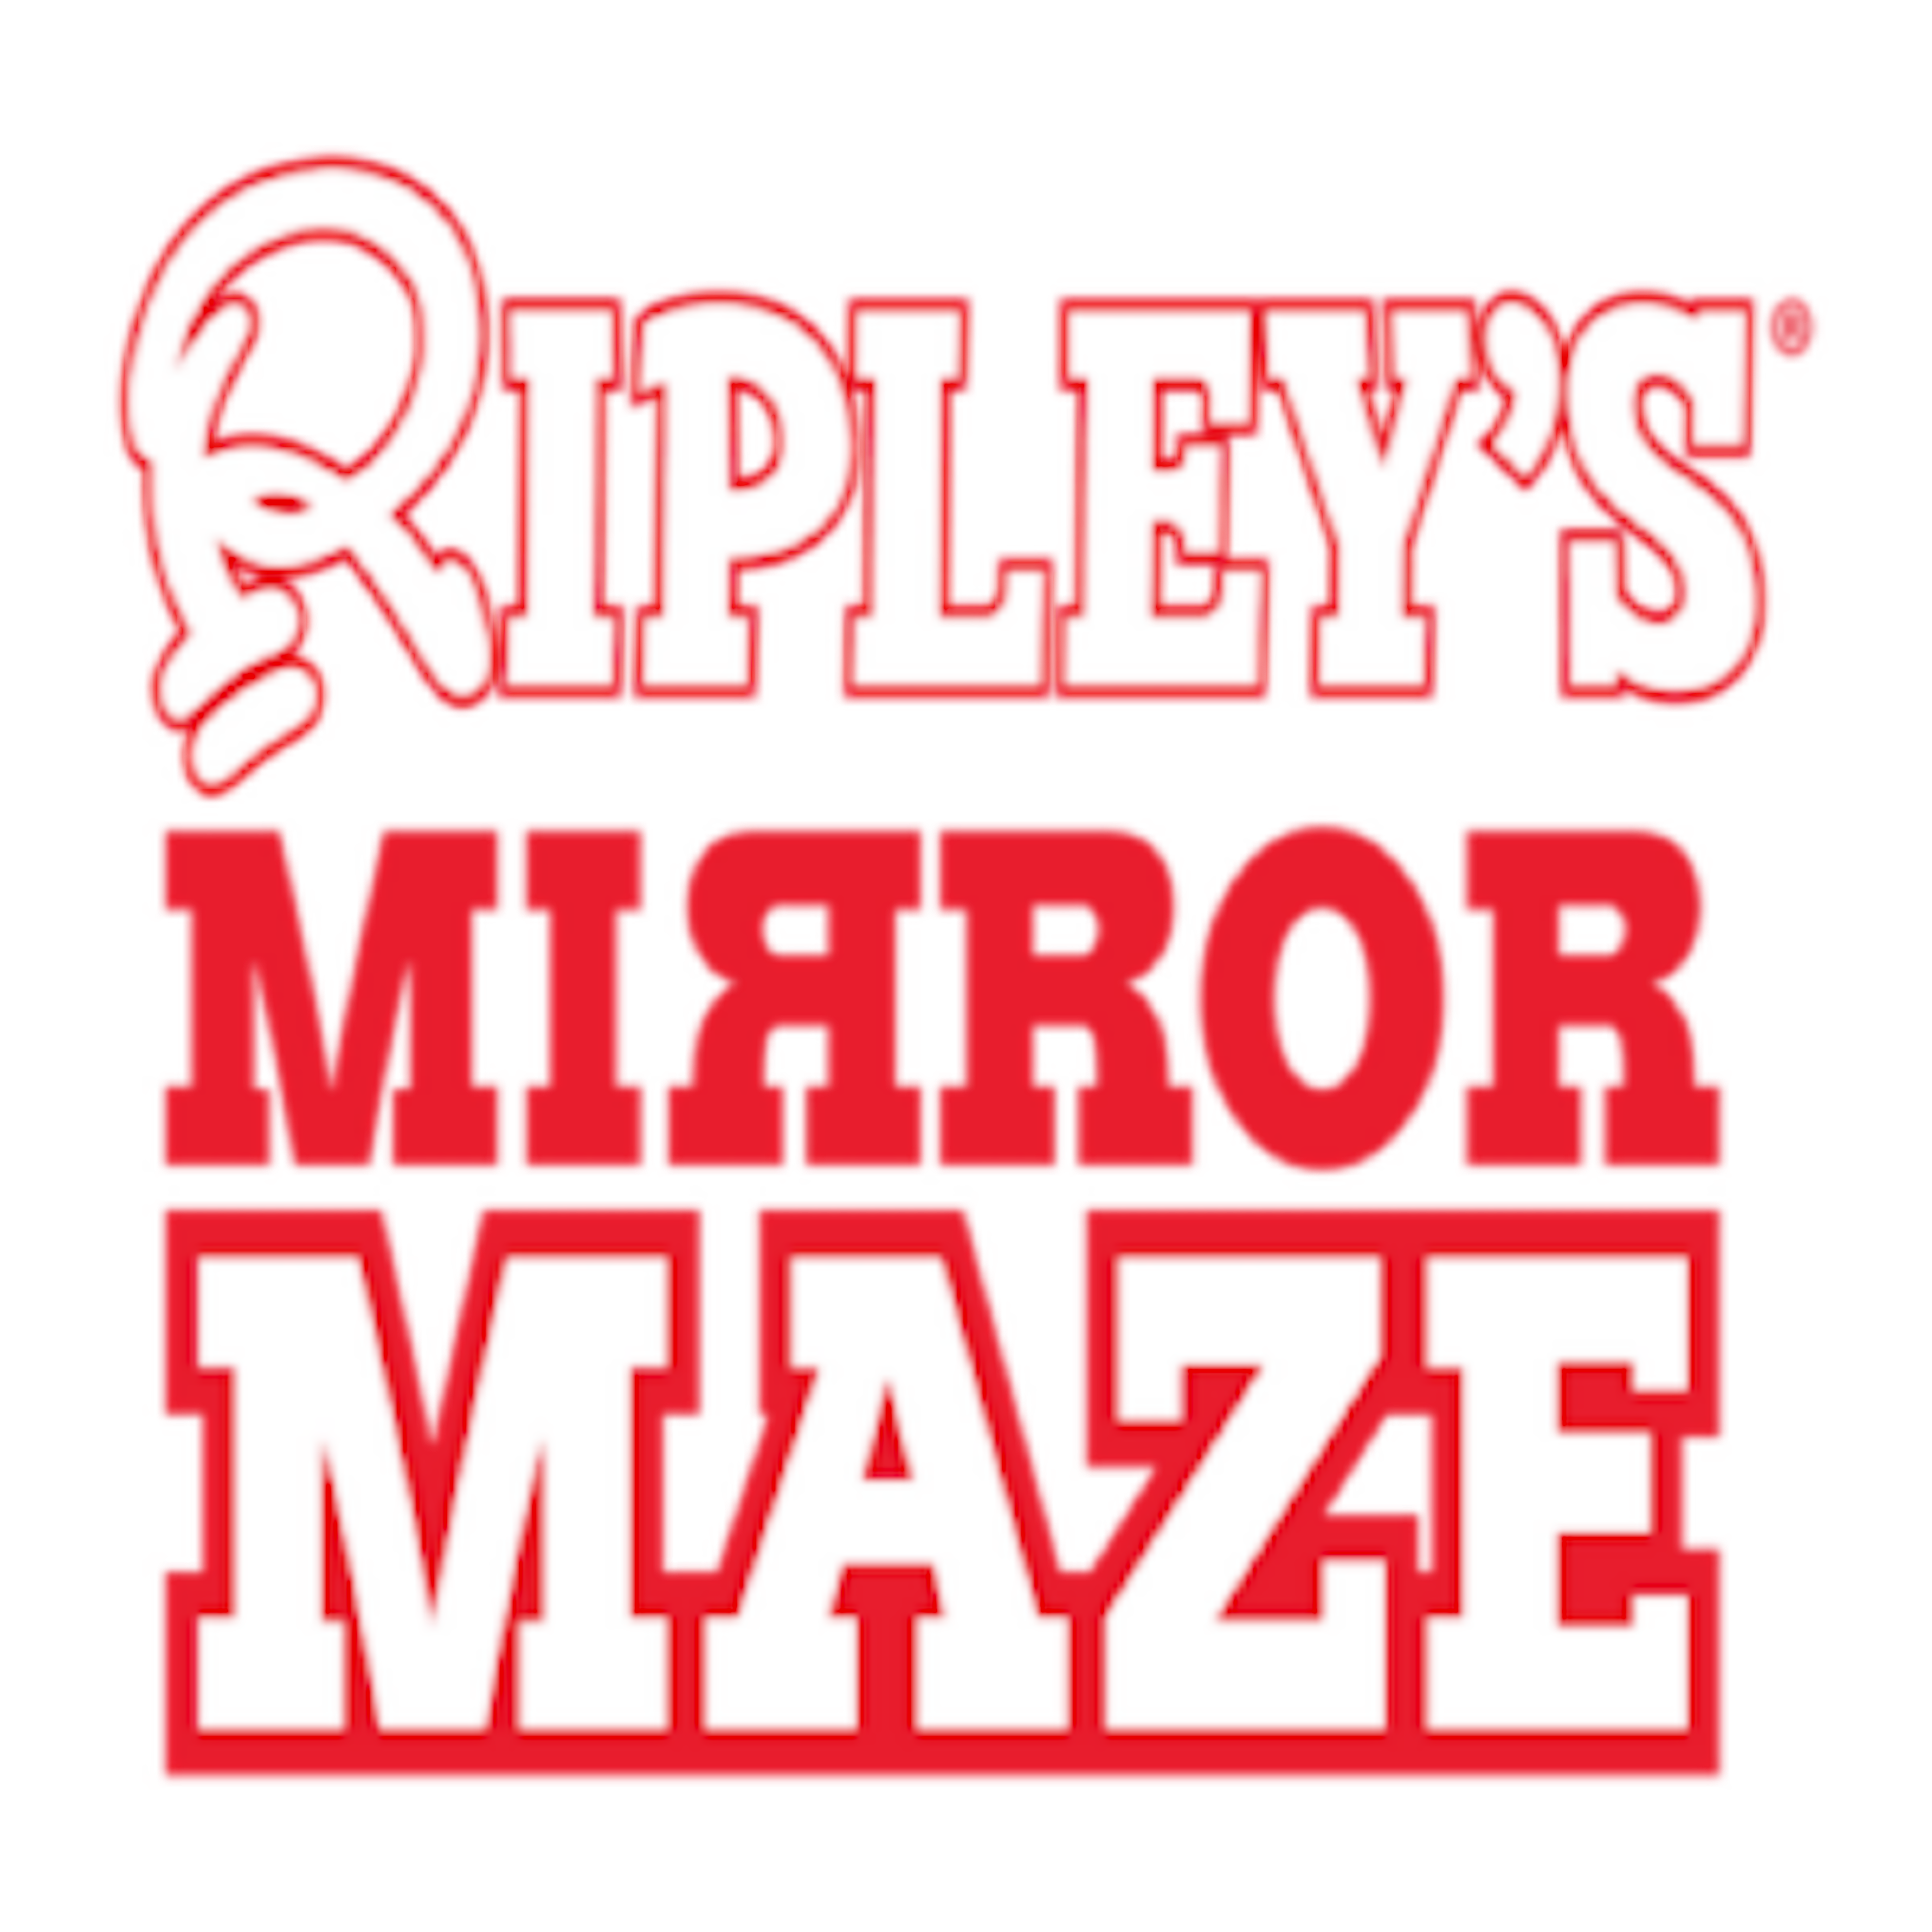 Ripley’s Mirror Maze